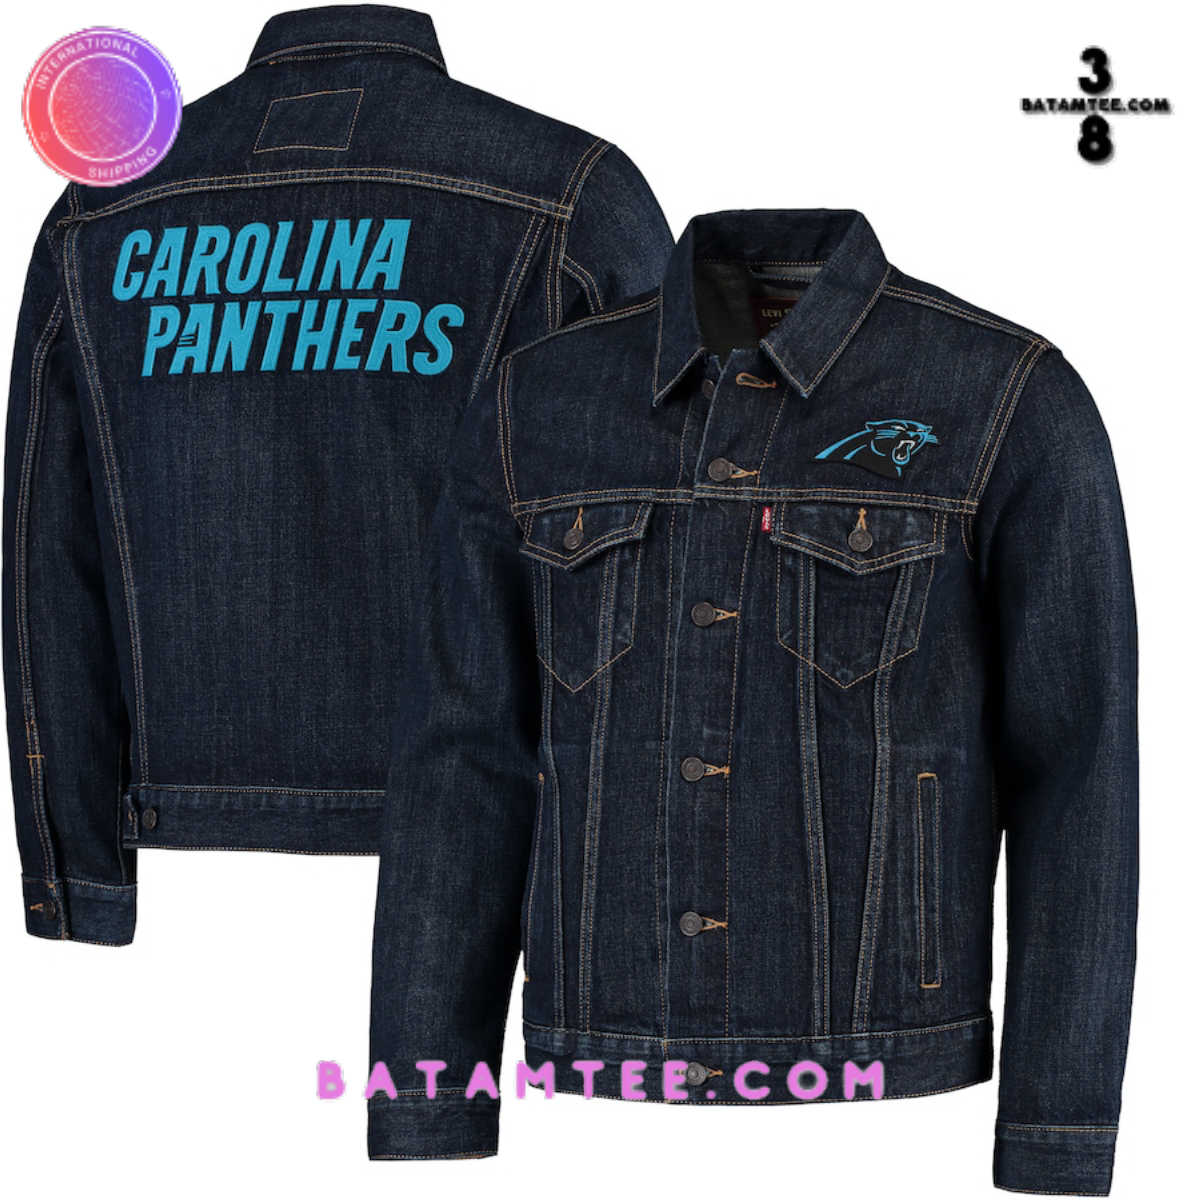 Levi's Blue Carolina Panthers Sports Navy Denim Trucker Jacket's Overview - Batamtee Shop - Threads & Totes: Your Style Destination